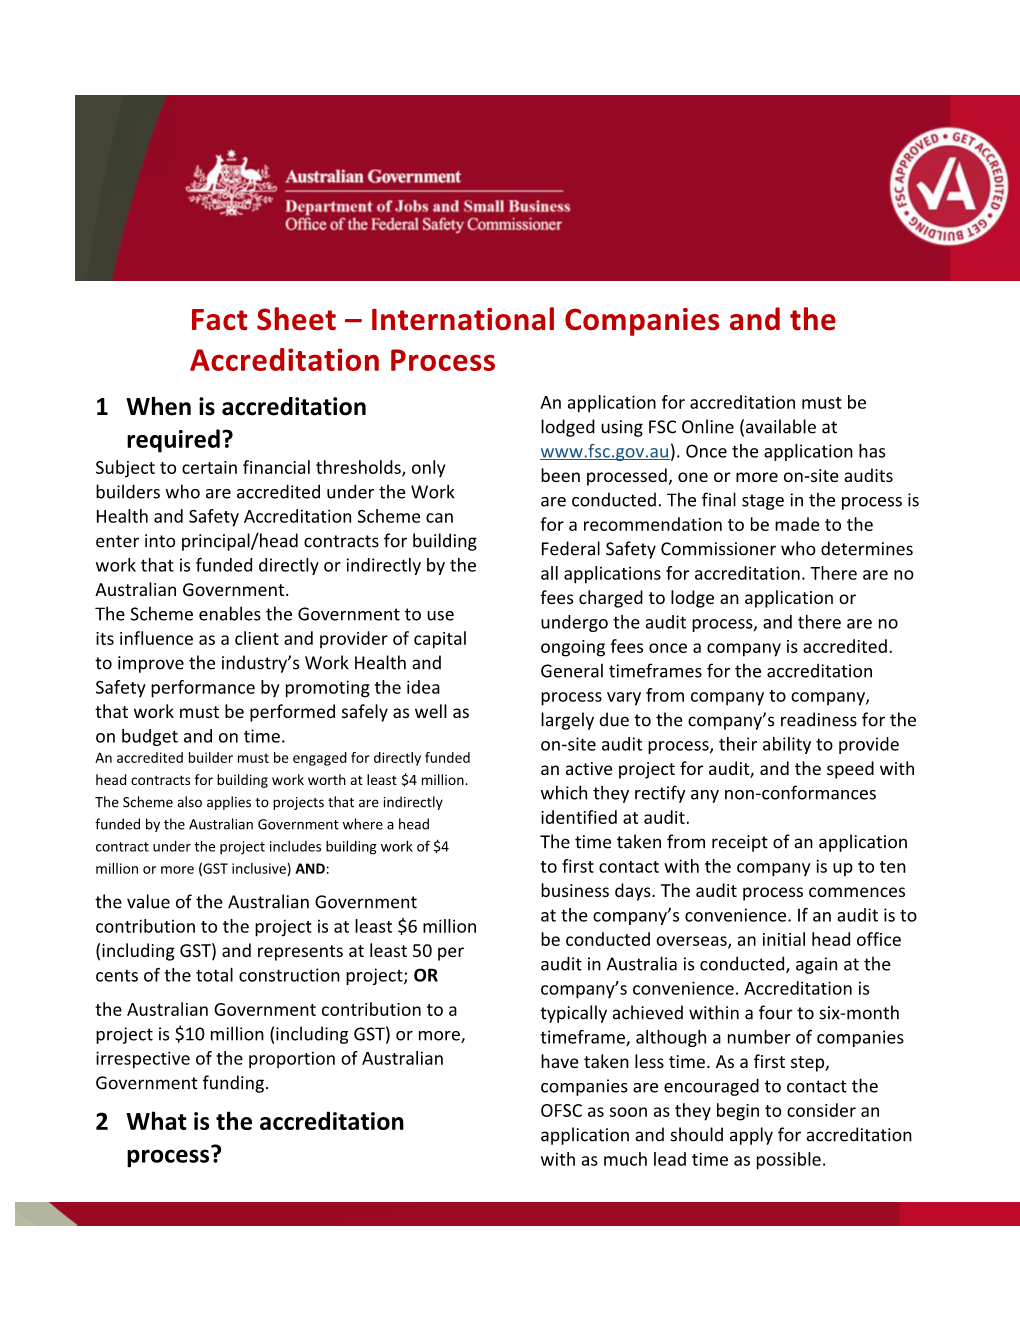 Fact Sheet International Companies and the Accreditation Process